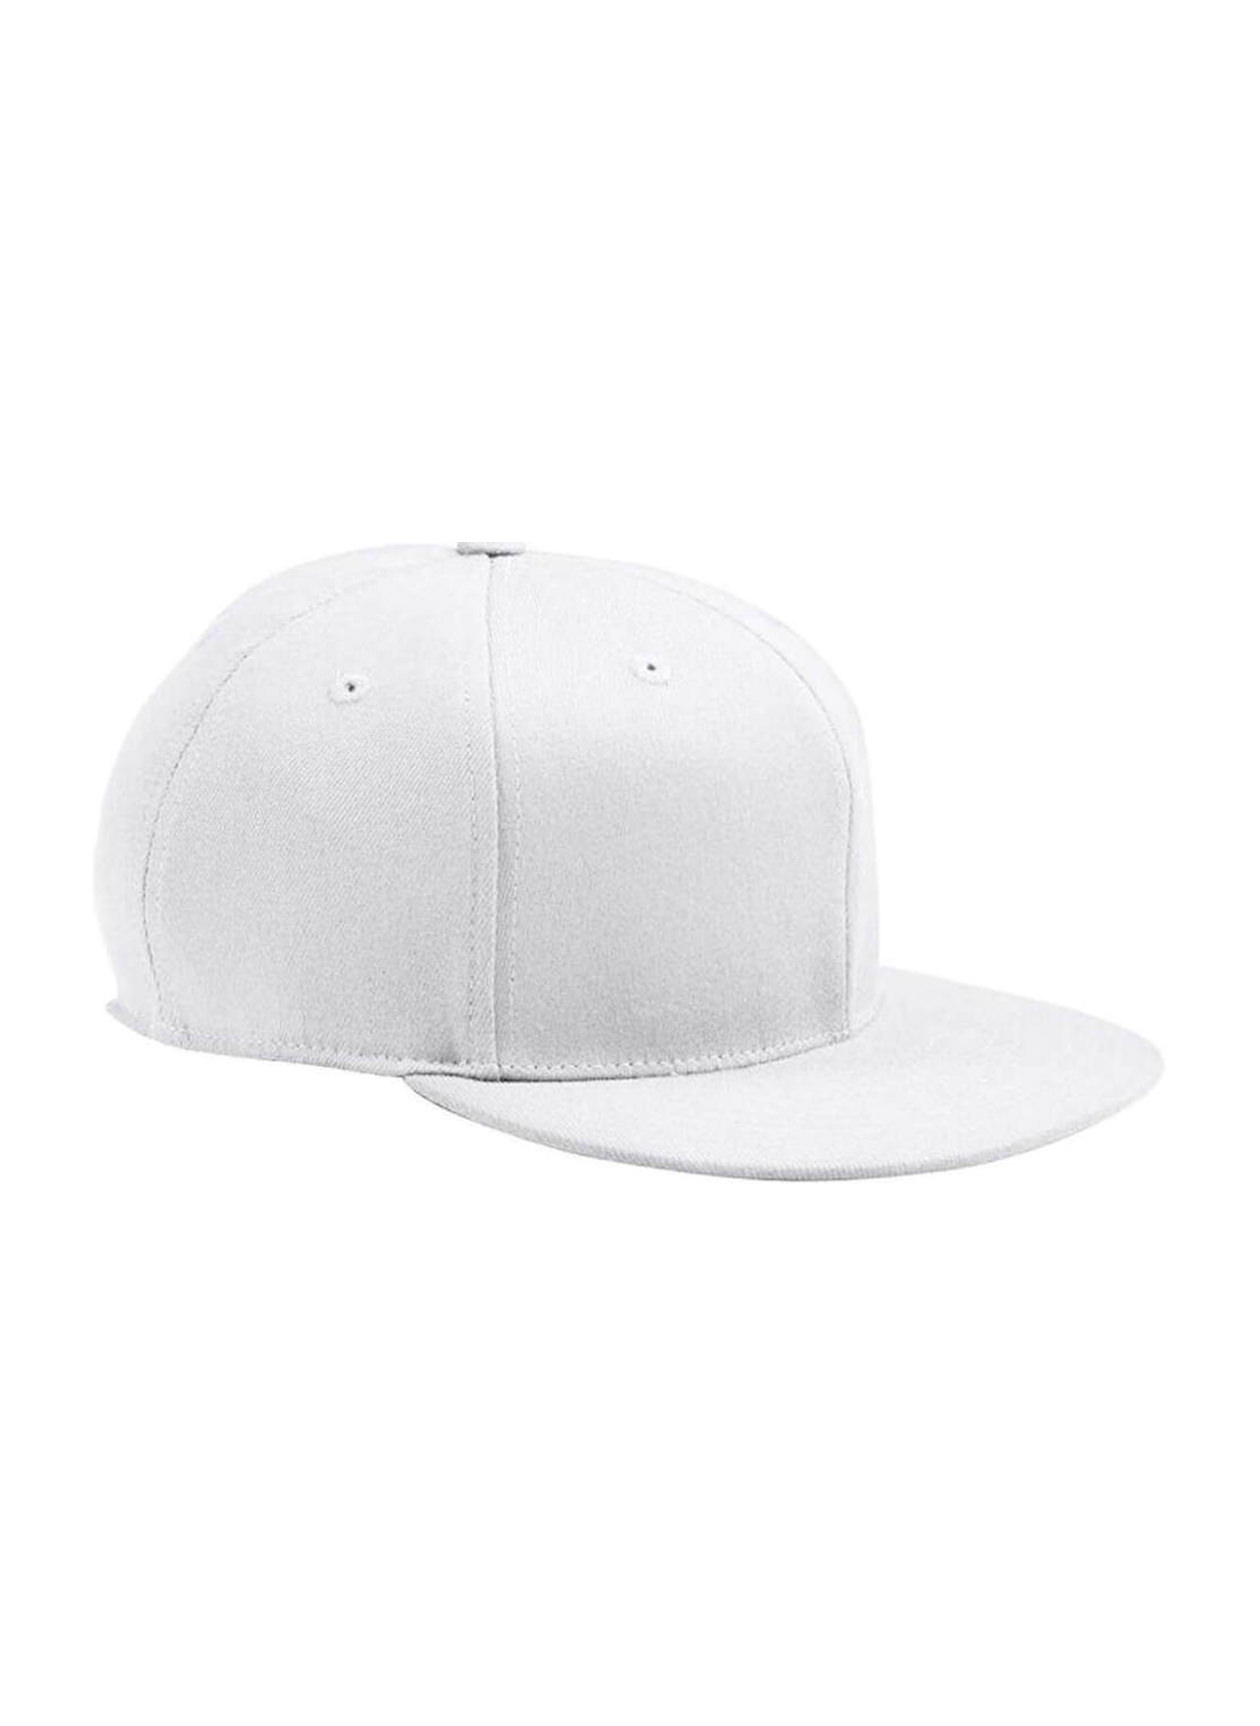 Flexfit White Premium 210 Fitted Hat